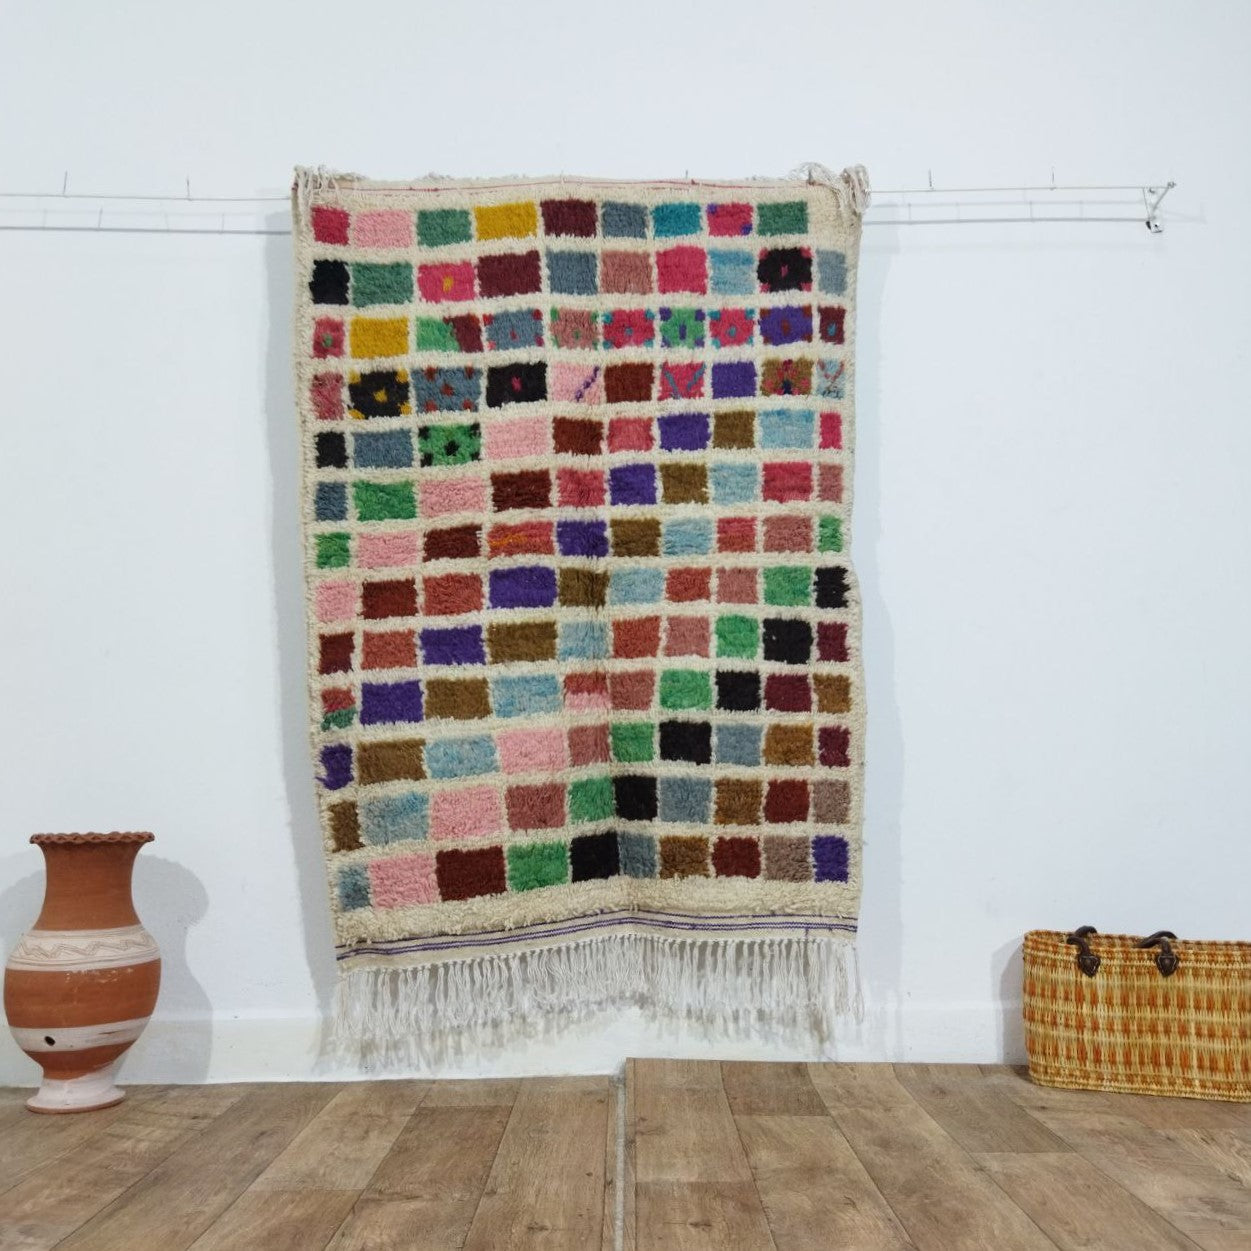 Colorful Handmade Rug, Colorful Checkered Rug - Berber style wool rug from Morocco - Modern rug